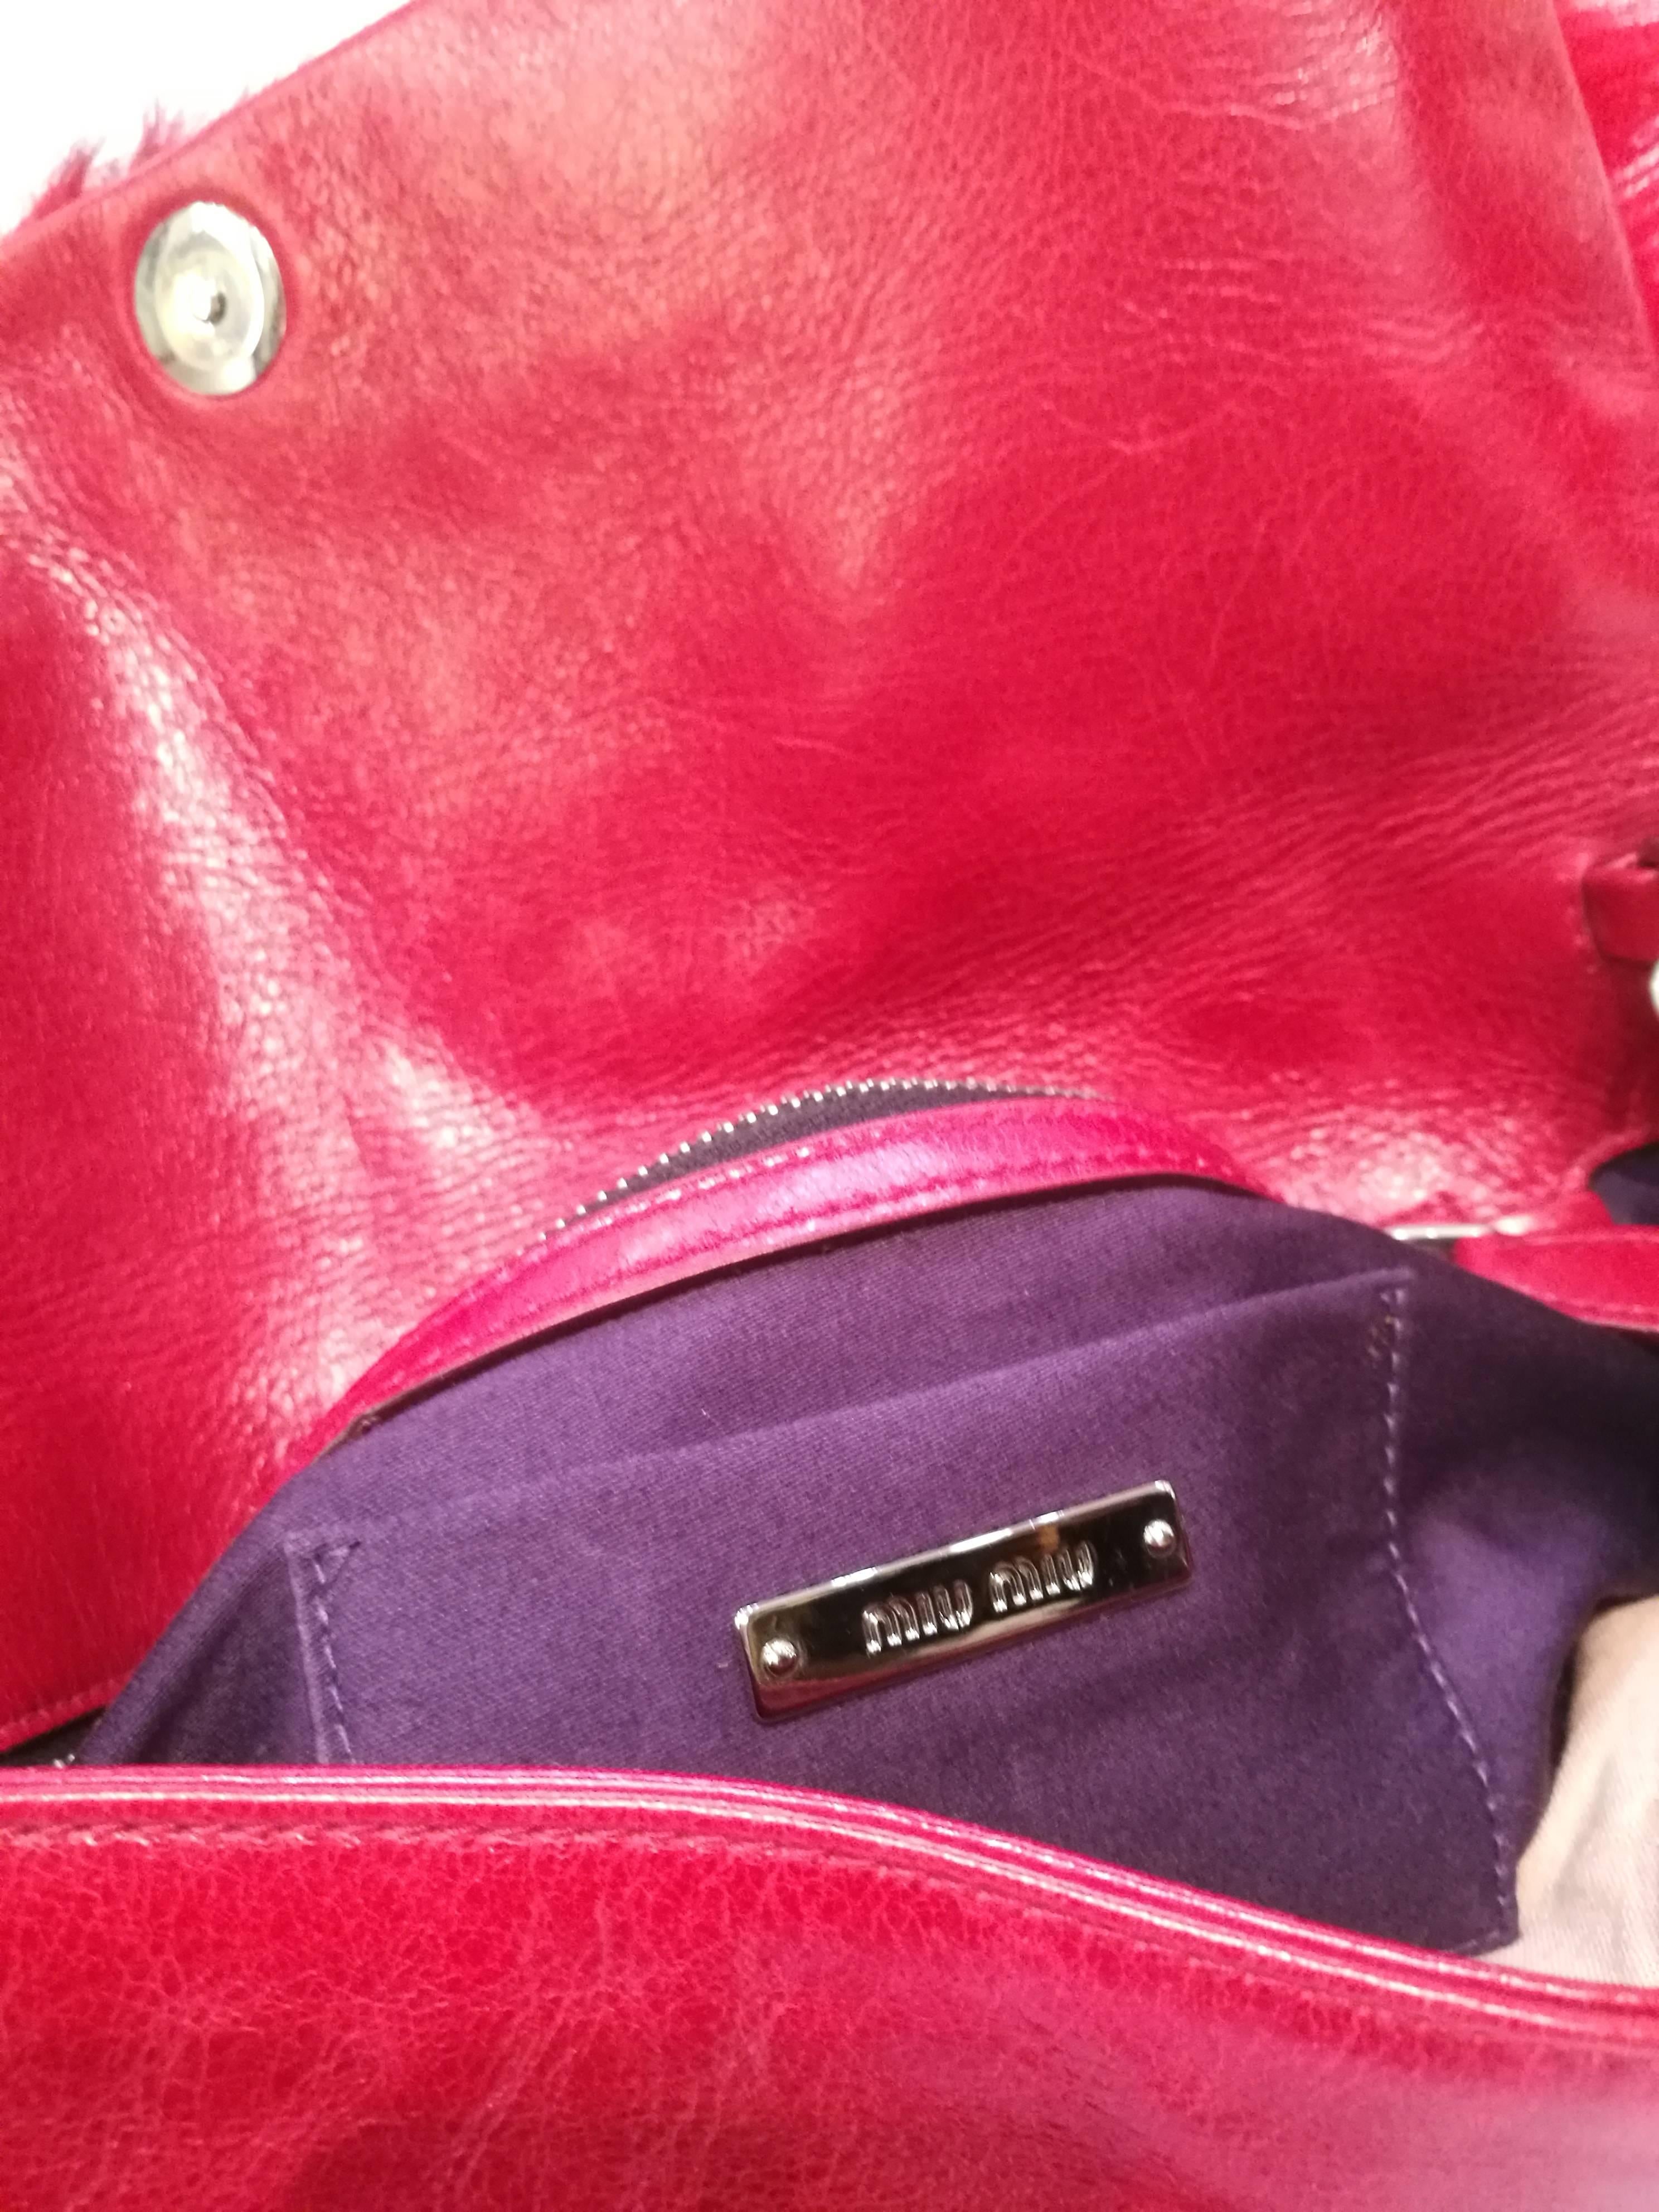 Brown Miu Miu Red and Black Shoulder Bag with crystal swarovski